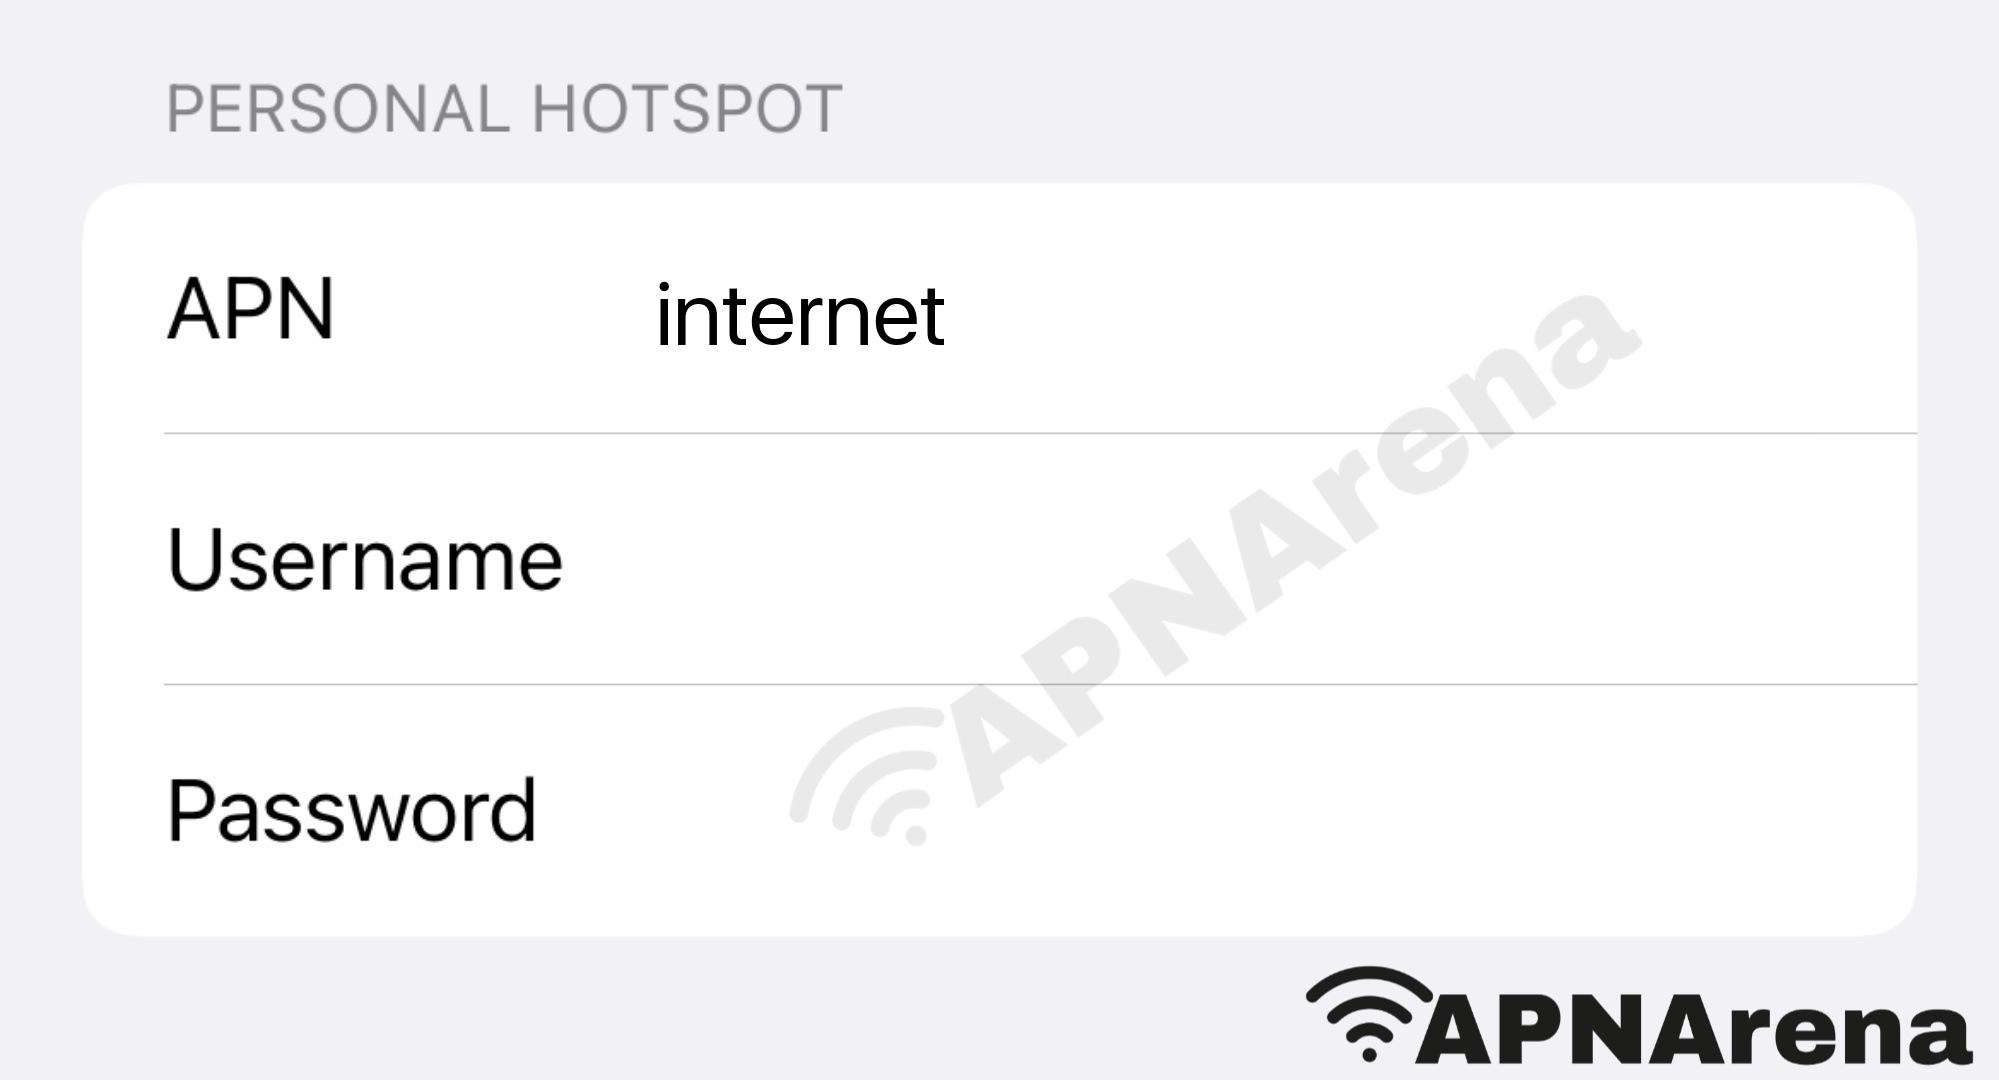 ZERO11 Wireless Personal Hotspot Settings for iPhone